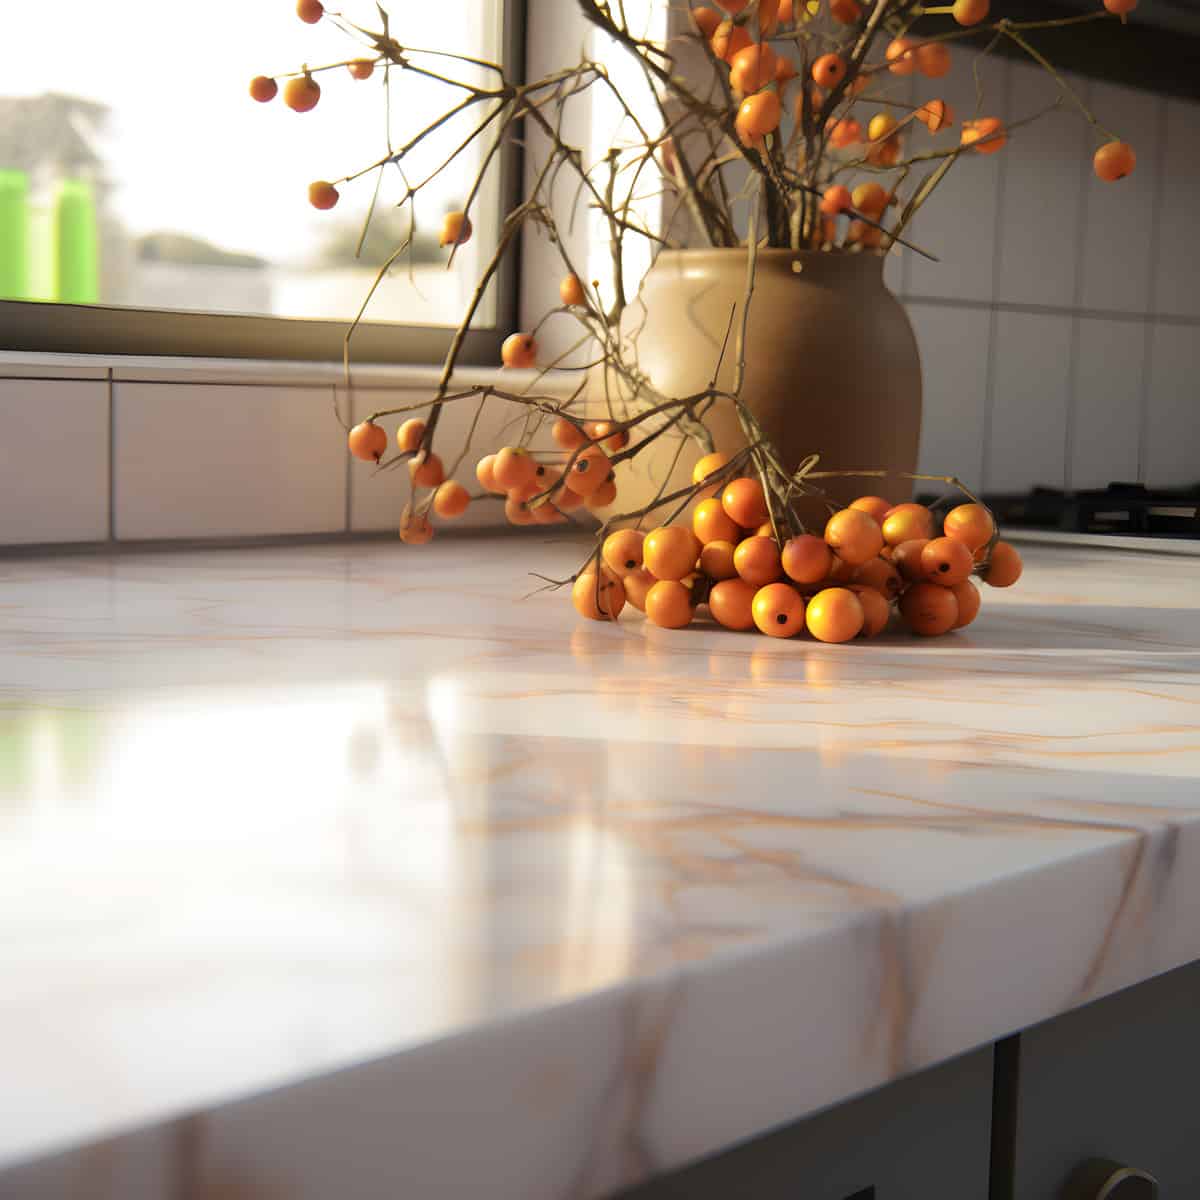 Butia Purpurascens on a kitchen counter